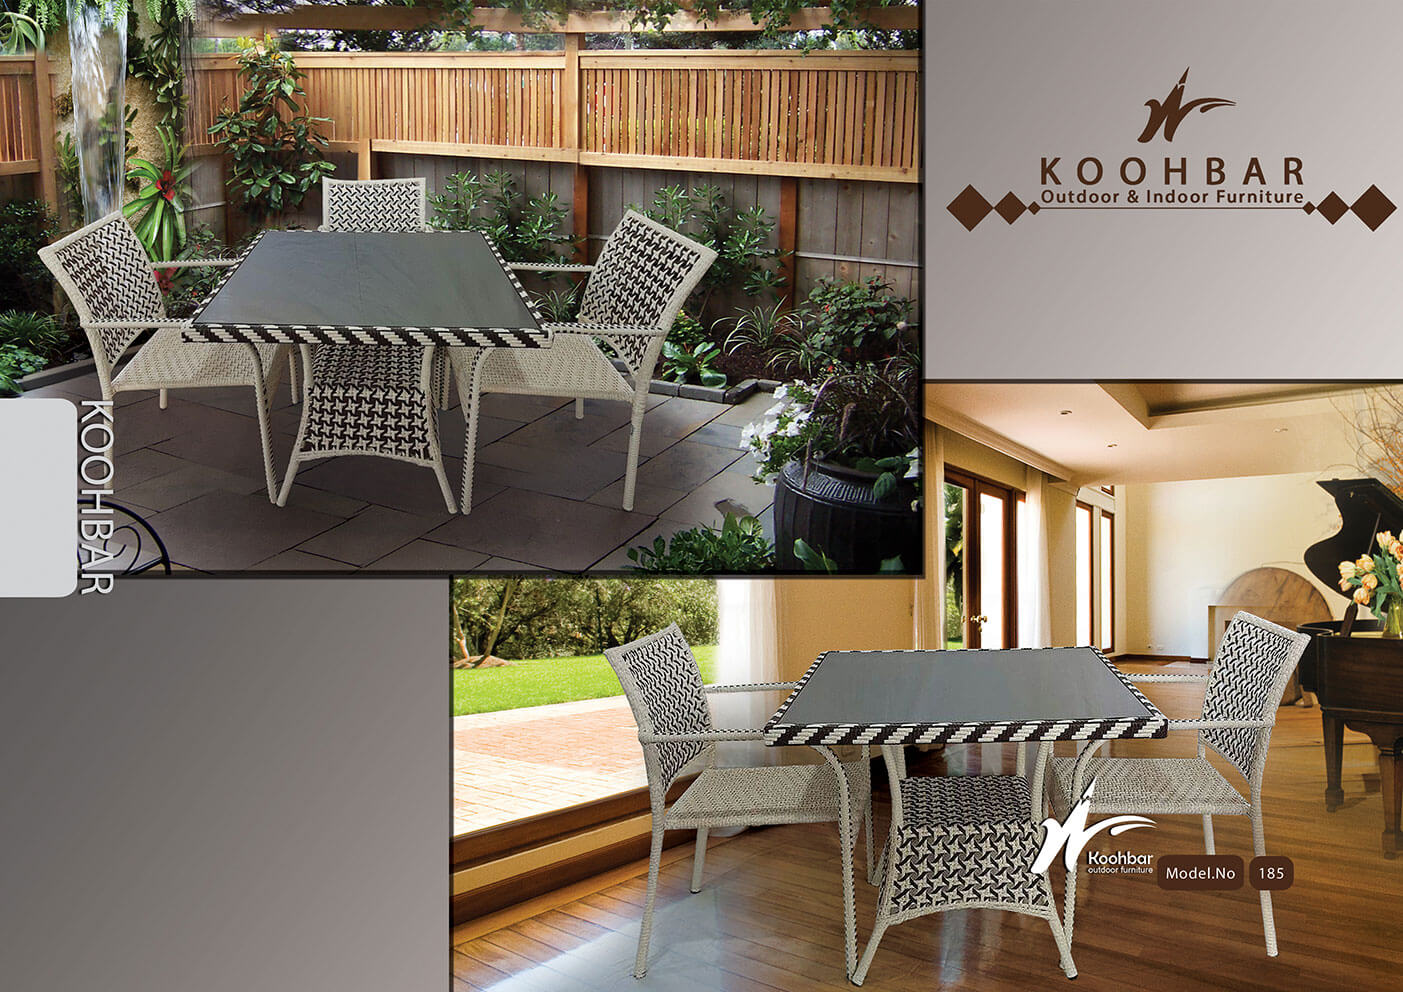 kohbar patio conversation sets 185 model0 - ست میز صندلی حصیری فضای باز کوهبر مدل ۱۸۵ -  - patio-dining-furniture